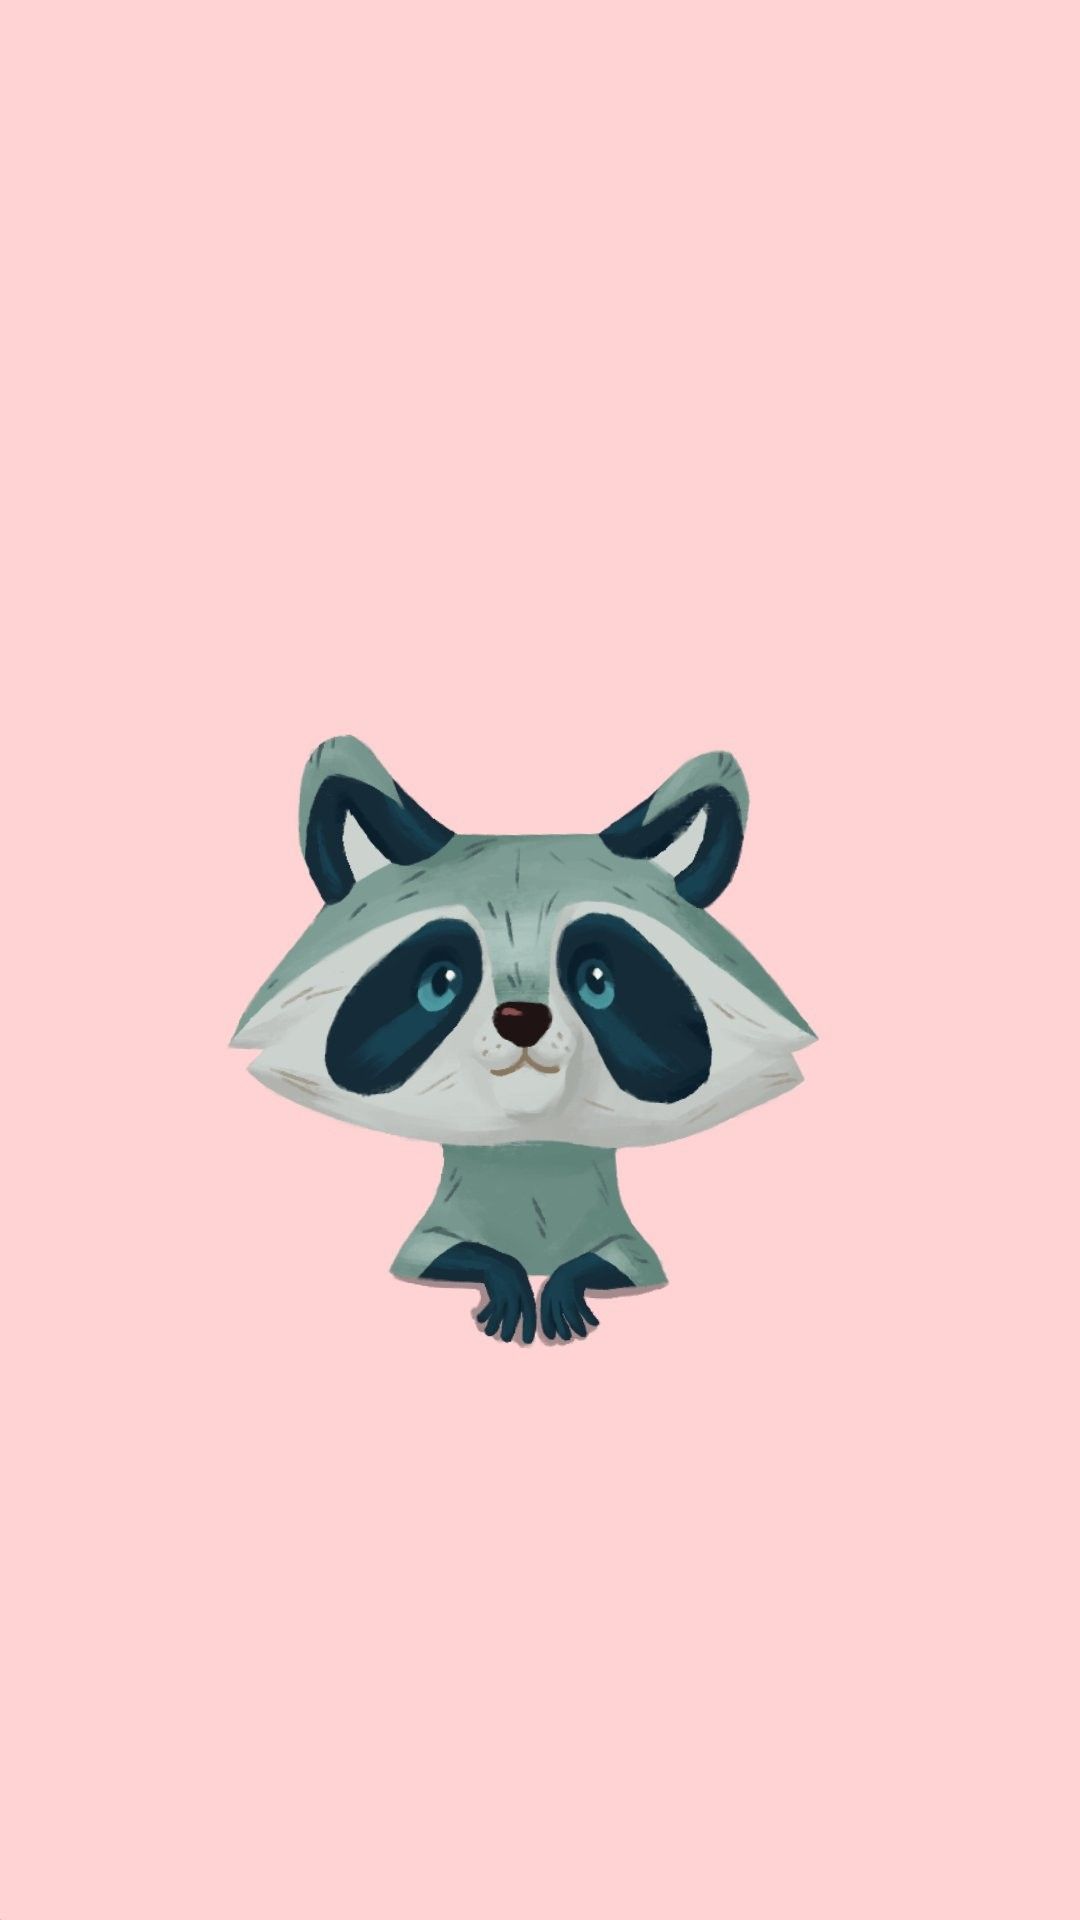 Wallpaper cute raccoon. Cute raccoon, Cute art, Animal illustration